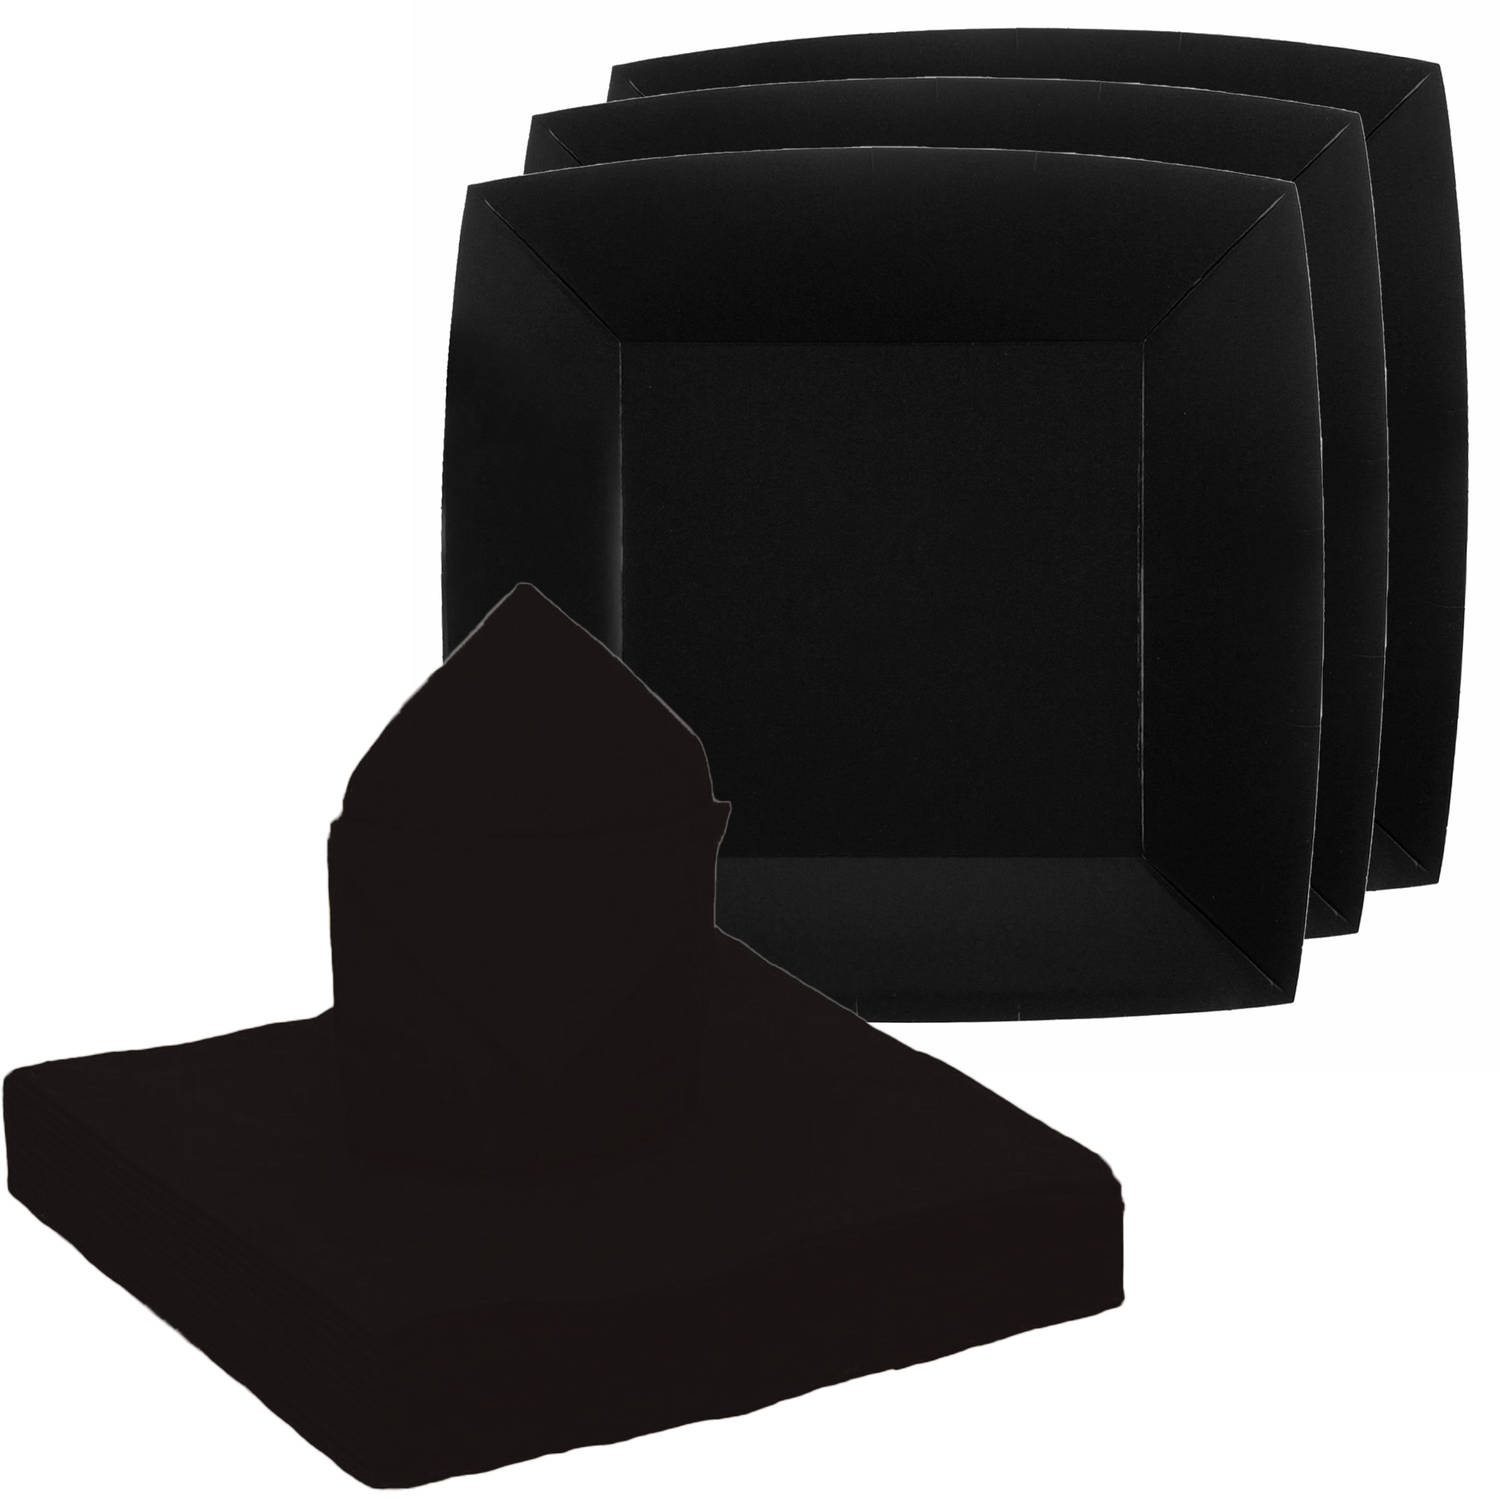 Feest-verjaardag servies set 20x gebaksbordjes-25x servetten zwart karton Feestbordjes